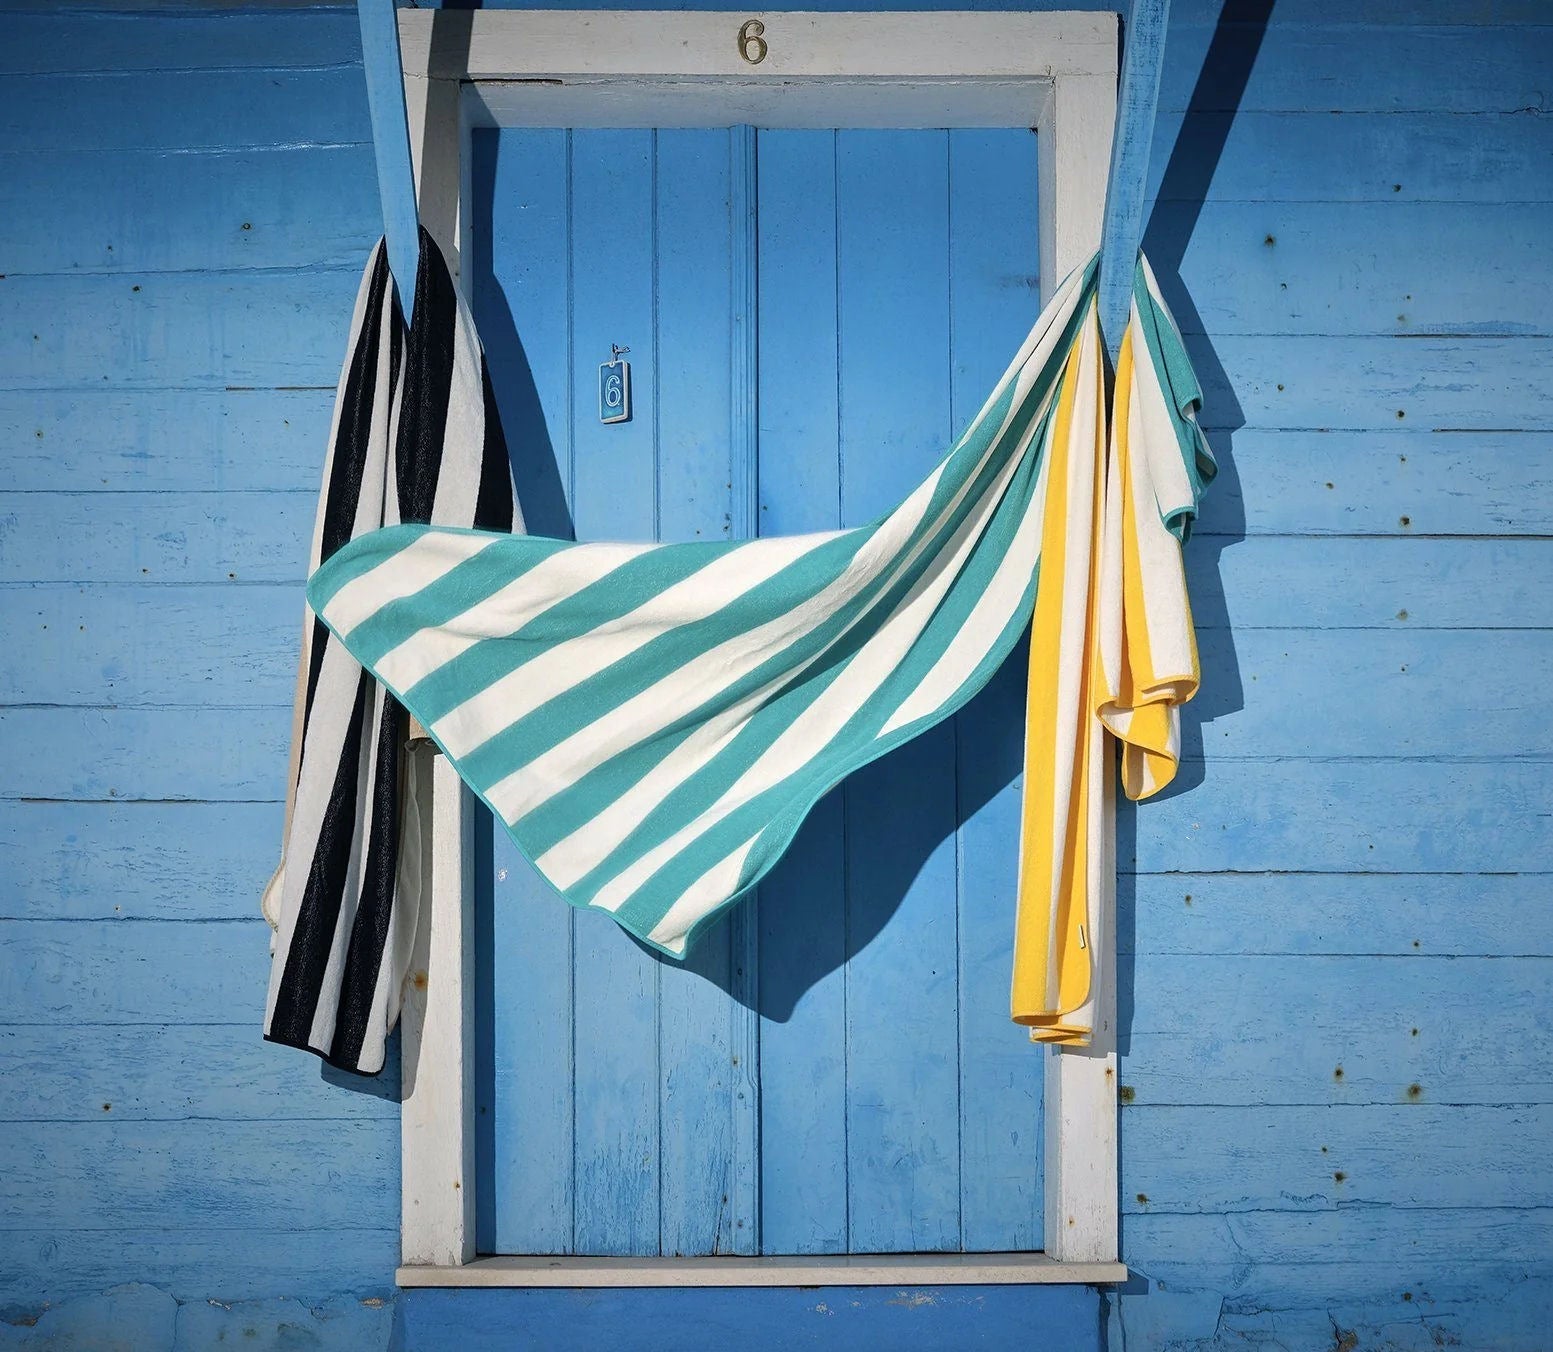 PRADO Luxury Egyptian Cotton Beach Towel - |VESIMI Design| Luxury and Rustic bathrooms online